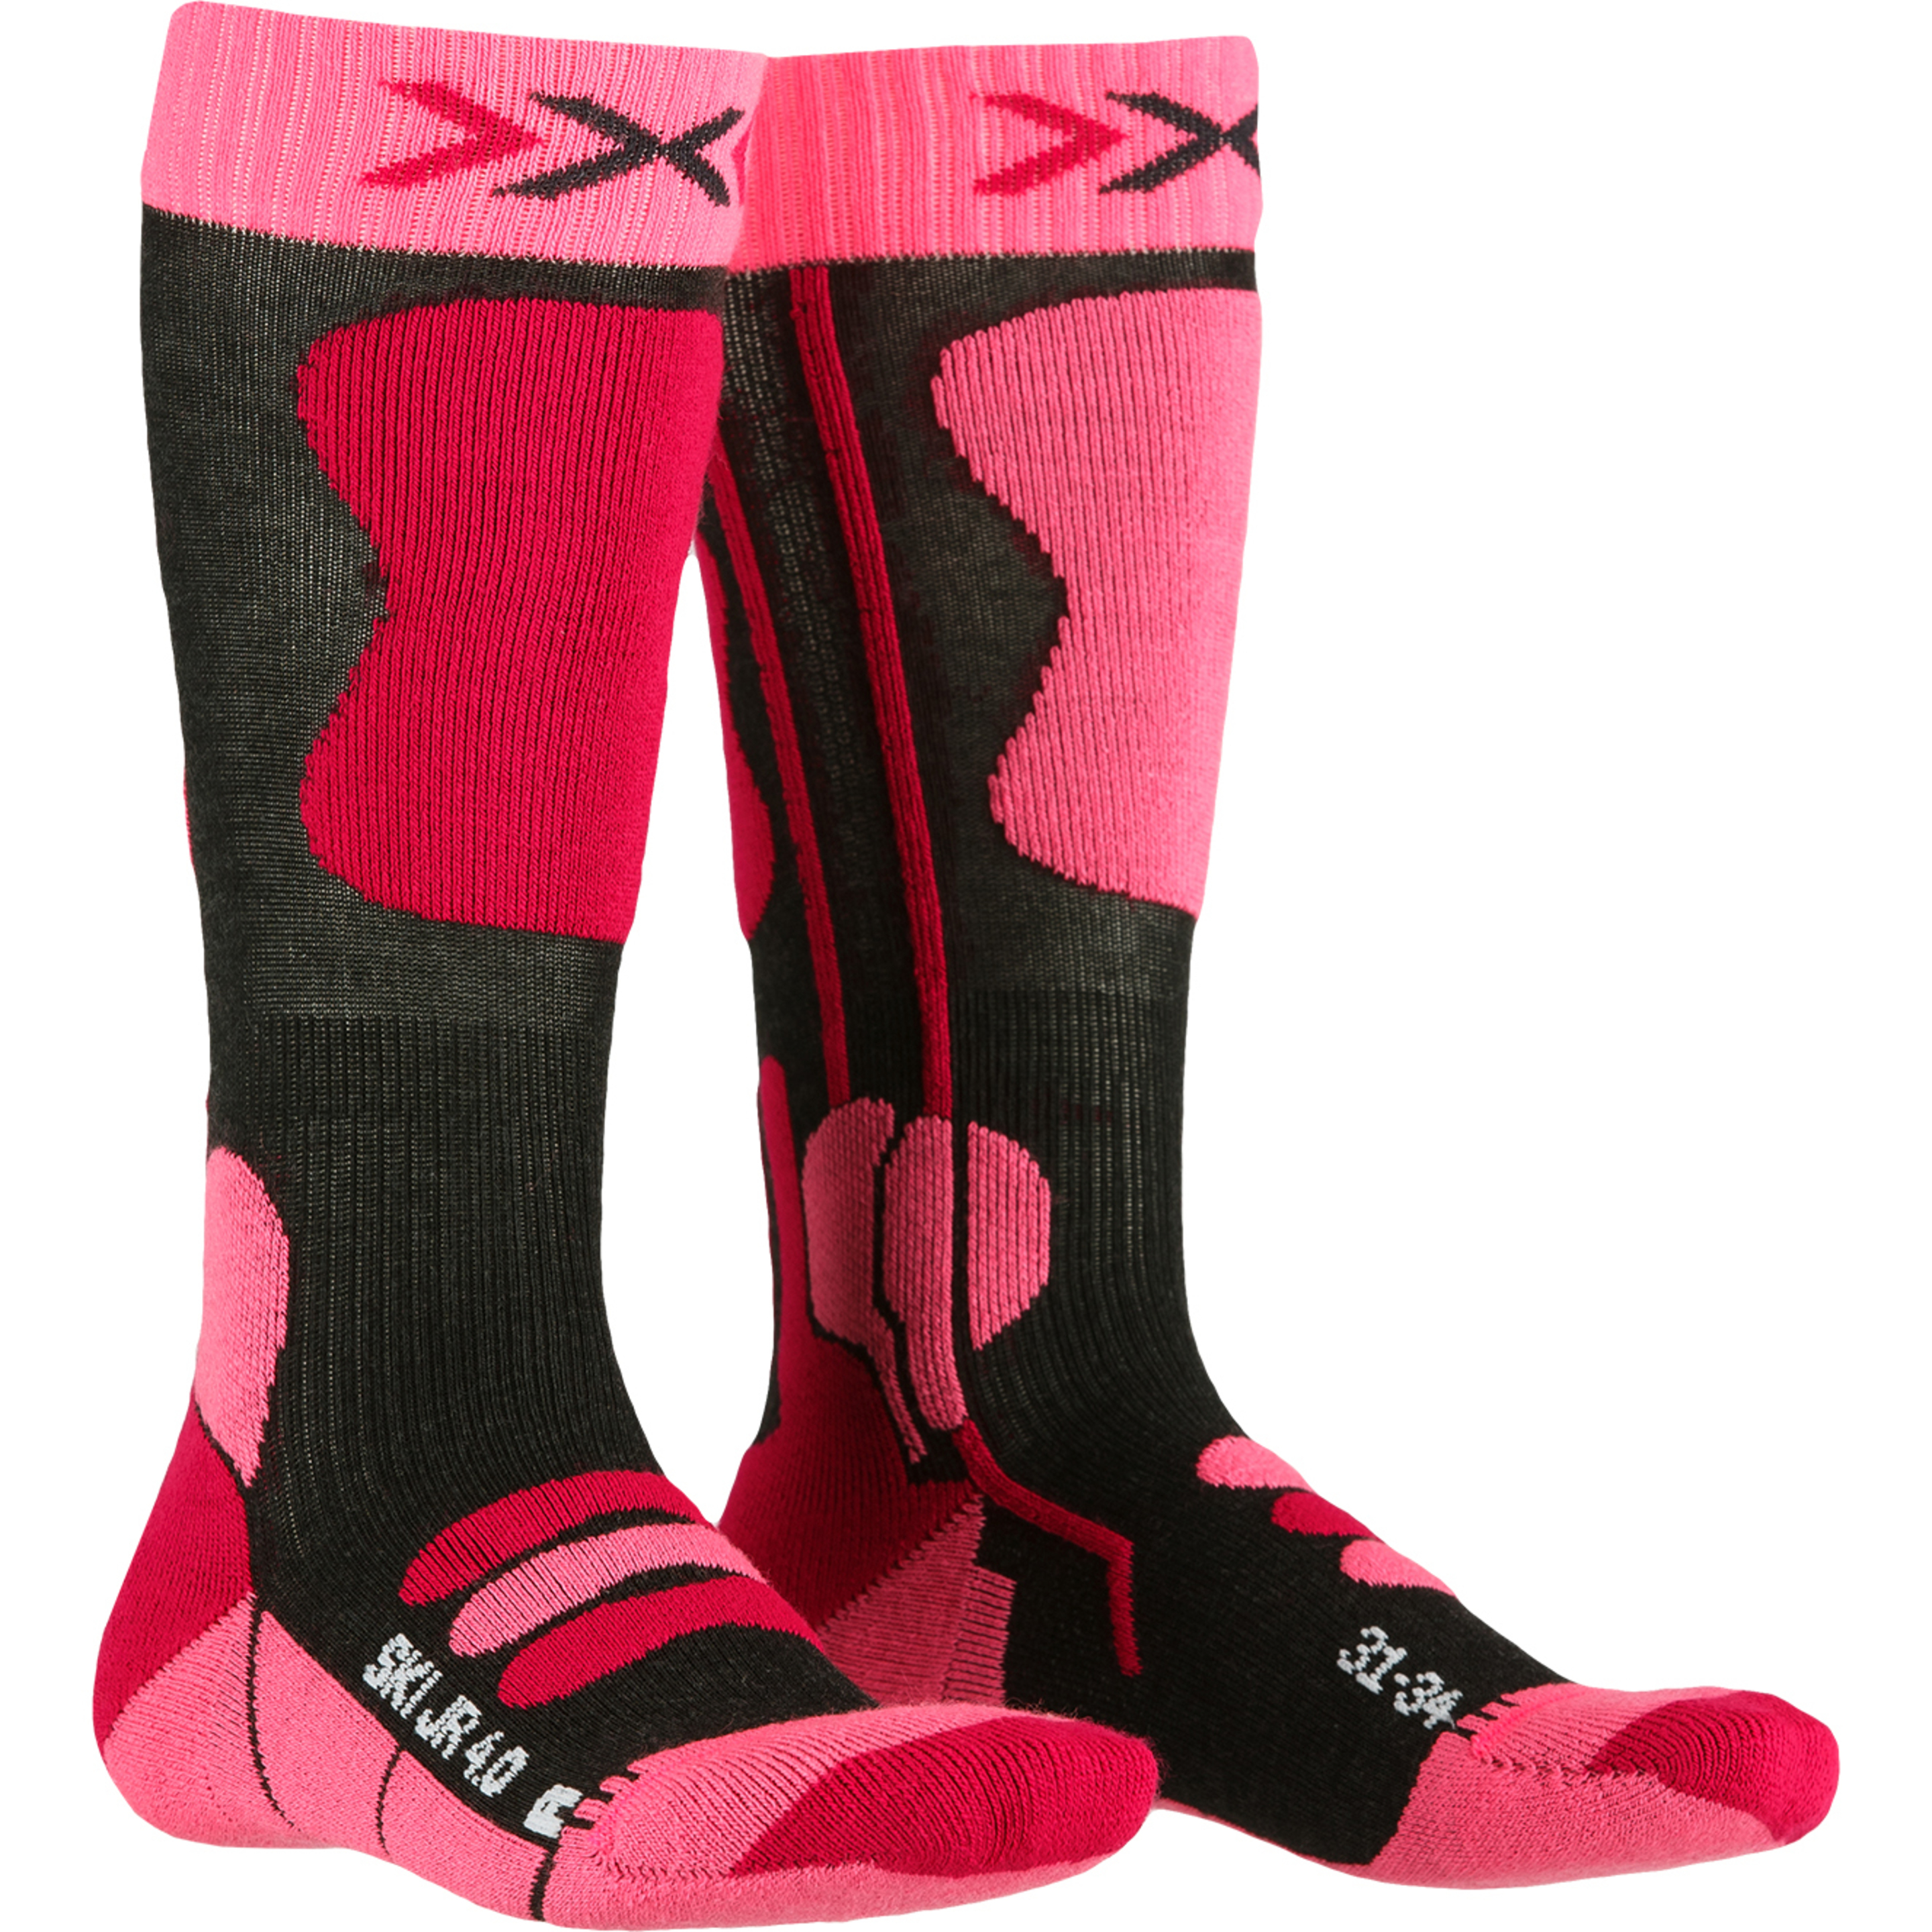 Calcetin Ski Jr 4.0  X-socks - Gris  MKP